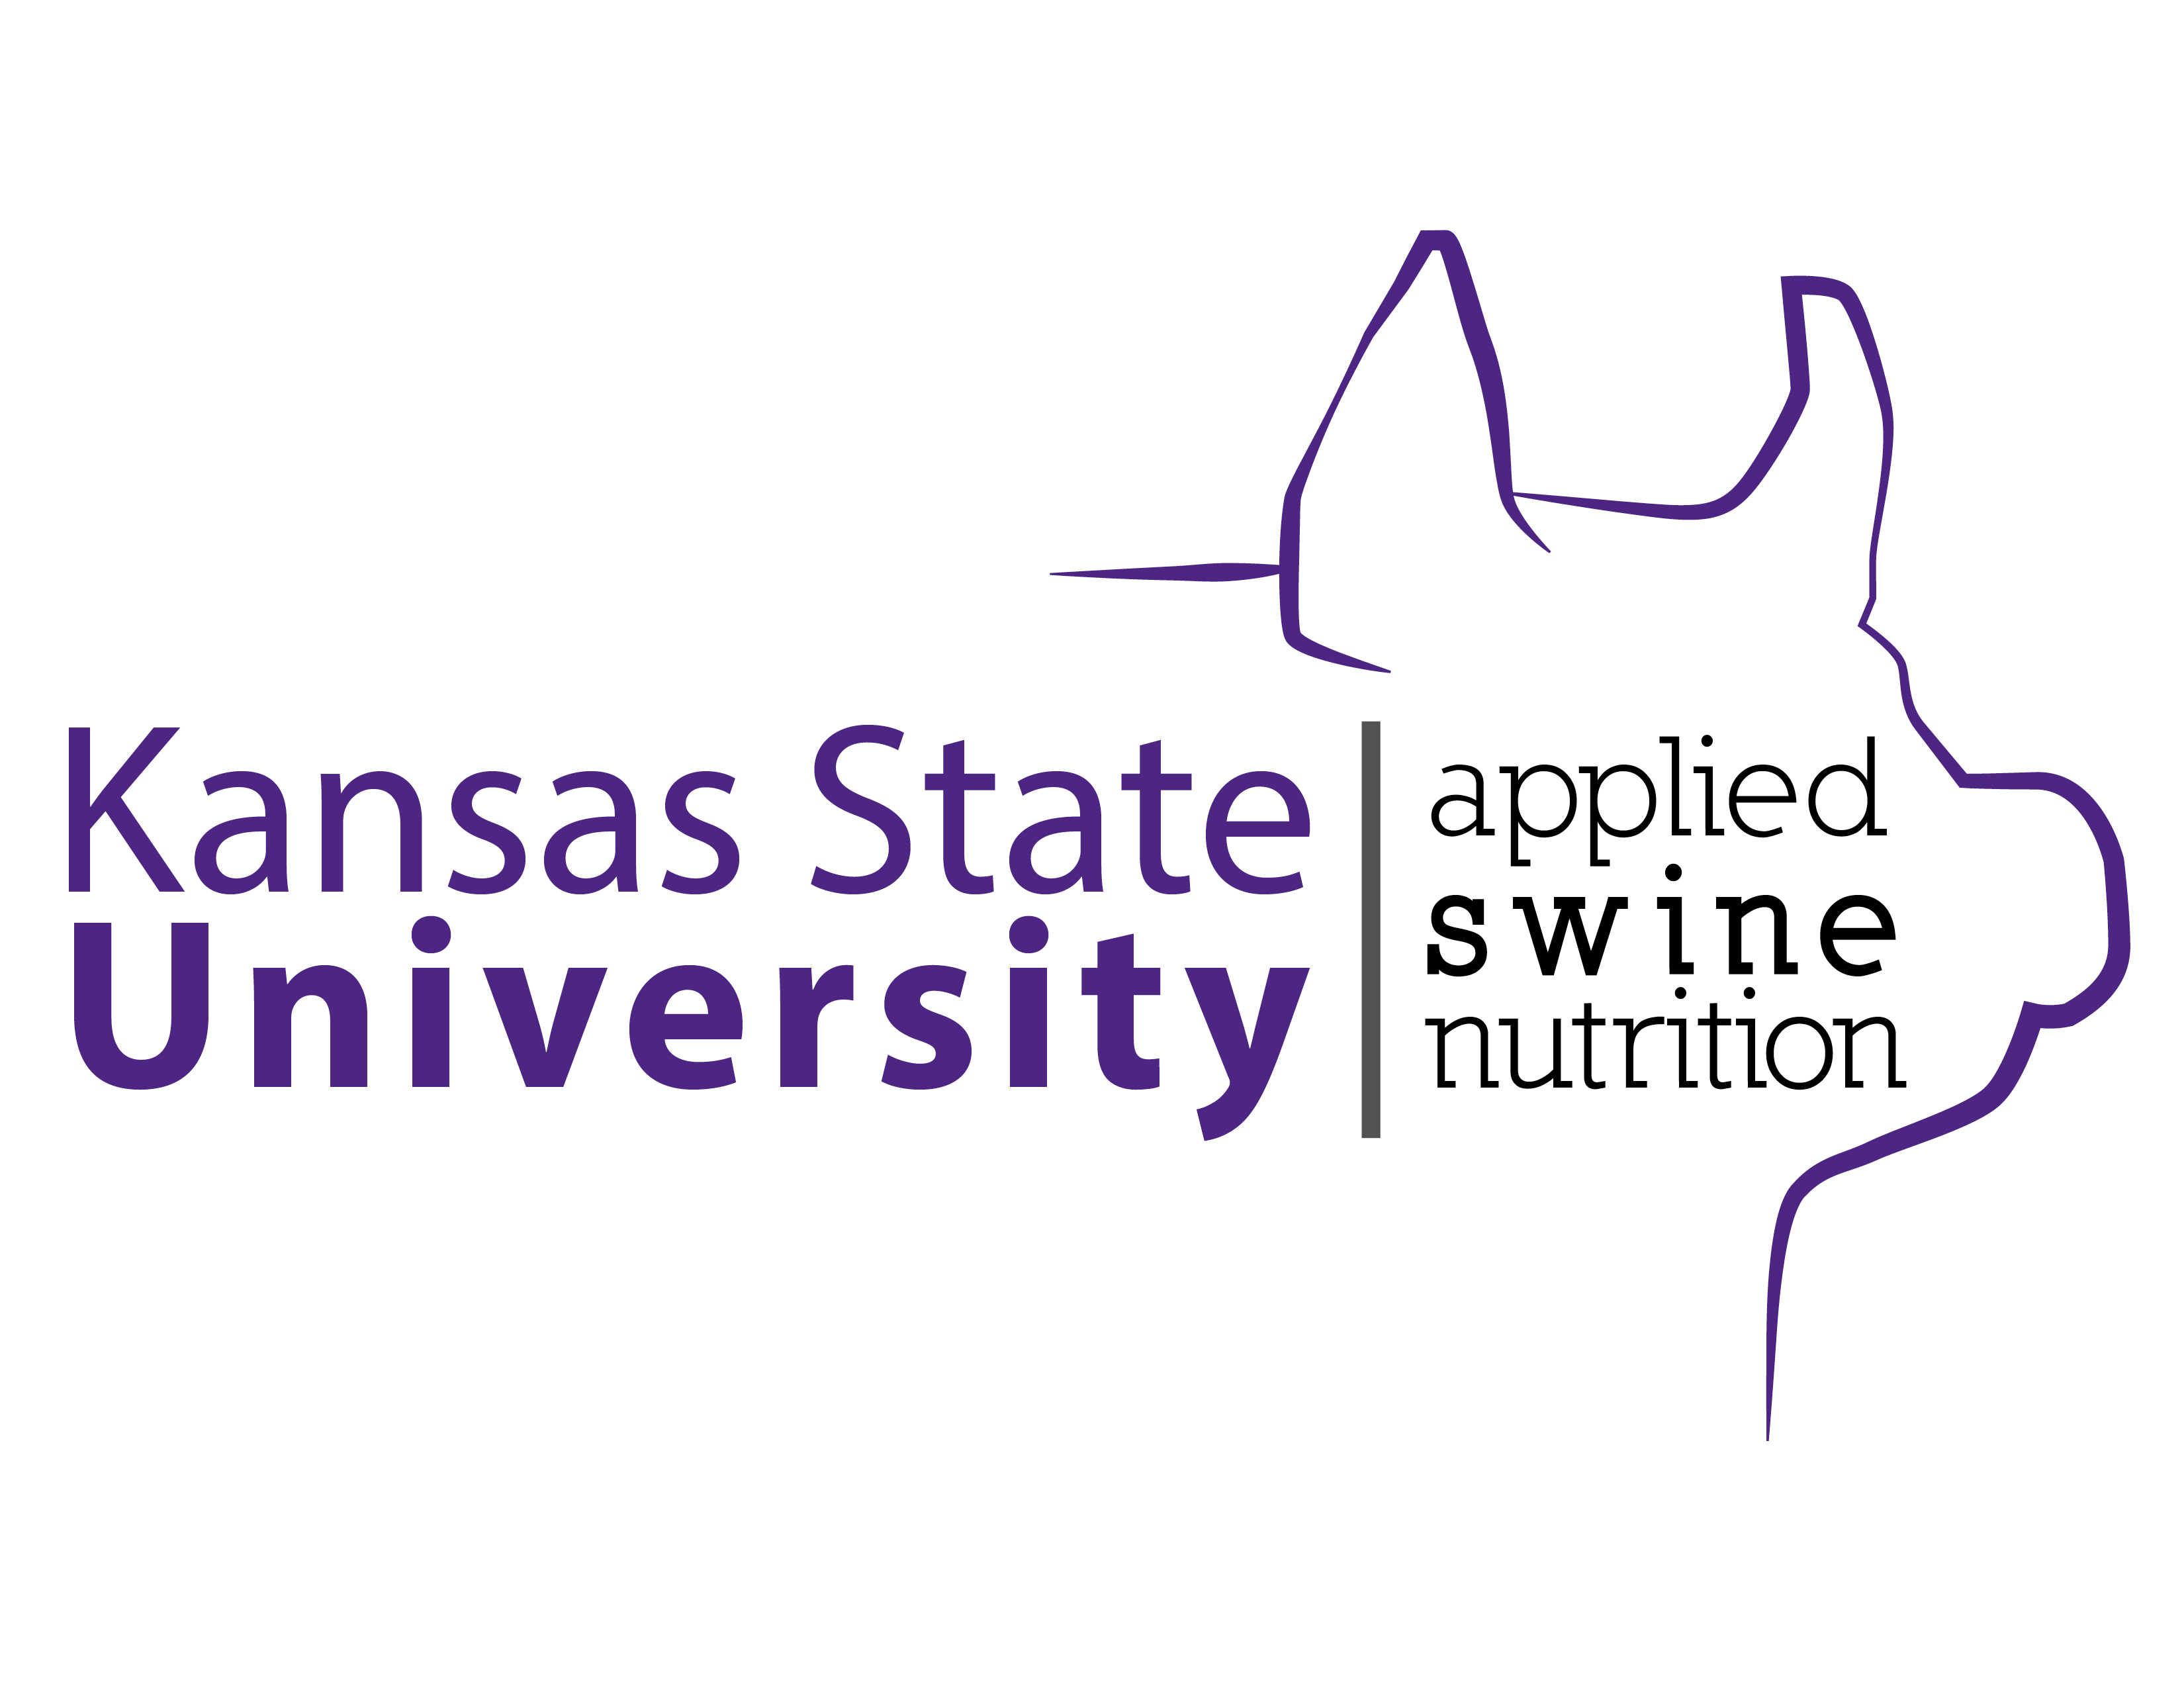 KSU Swine Nutrition logo